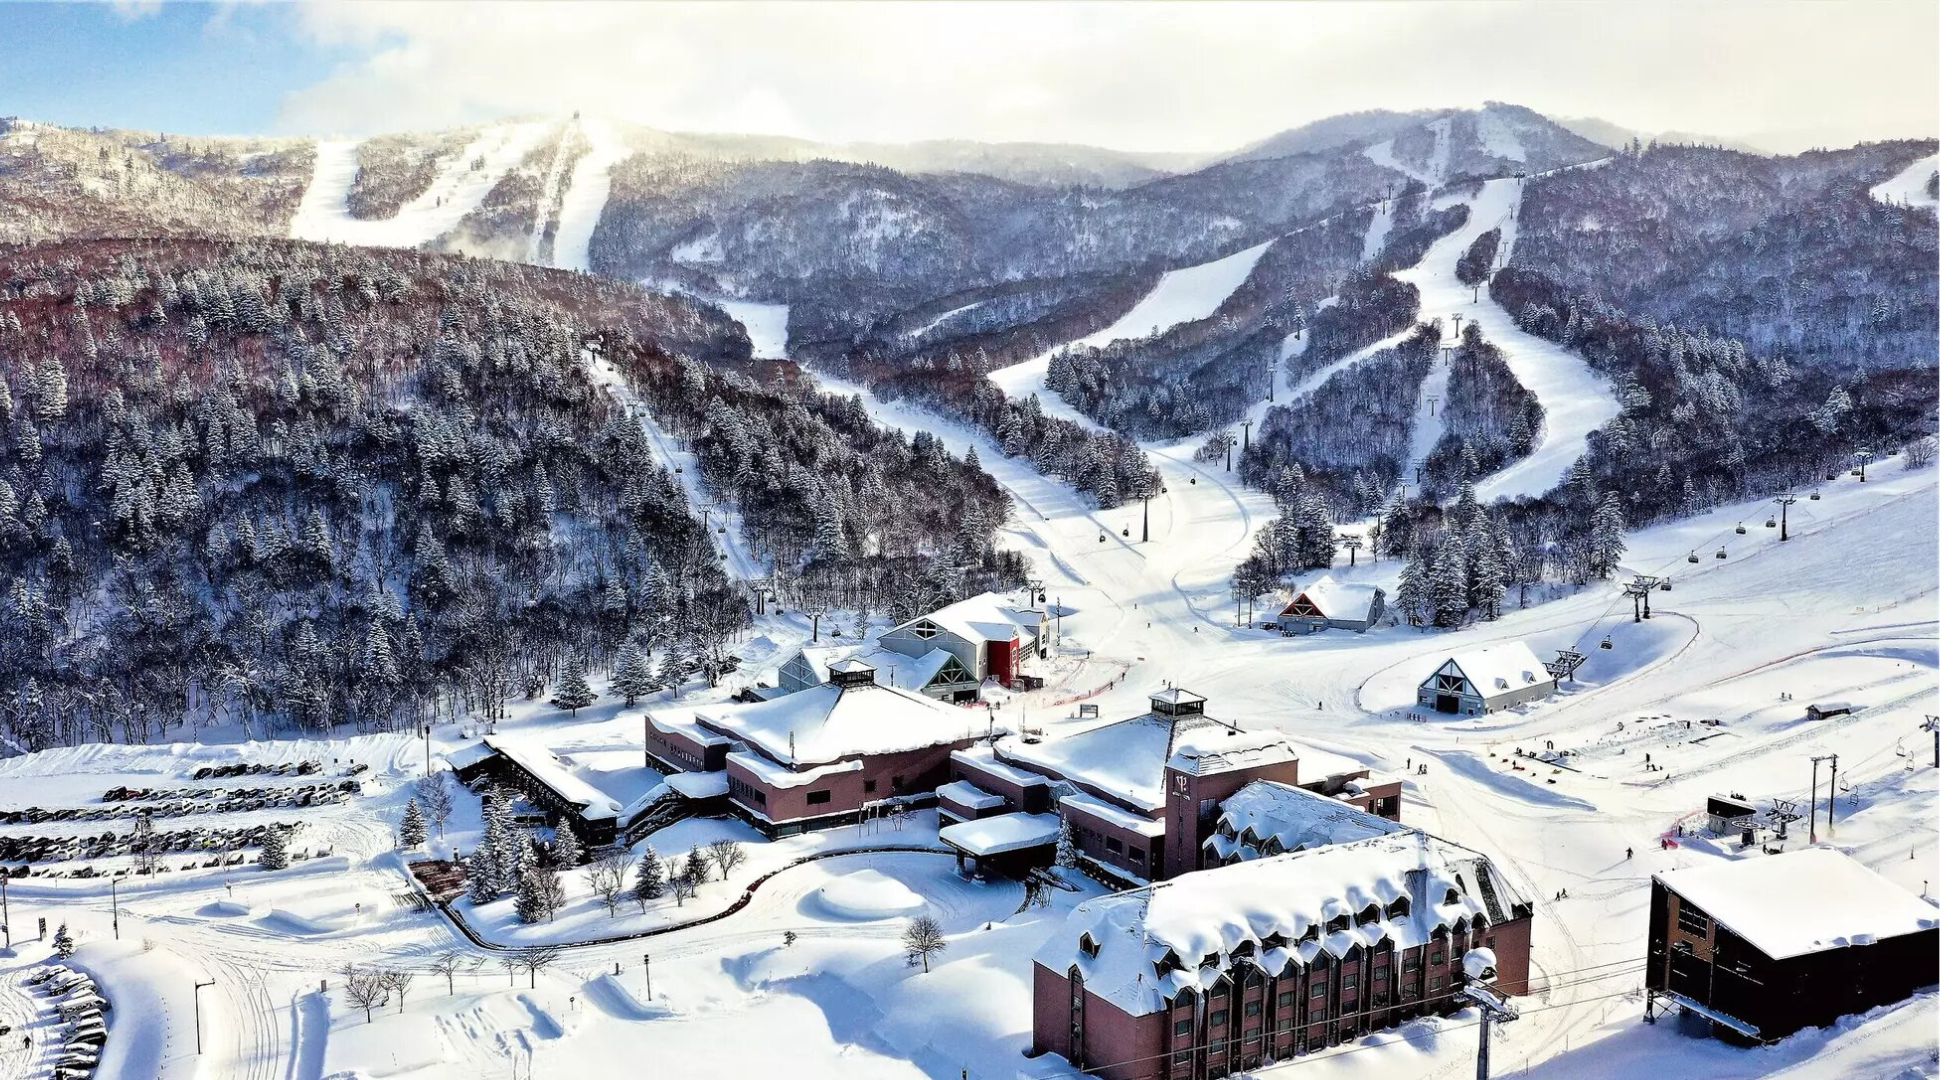 Club Med Kiroro is a Japan ski resort in Hokkaido